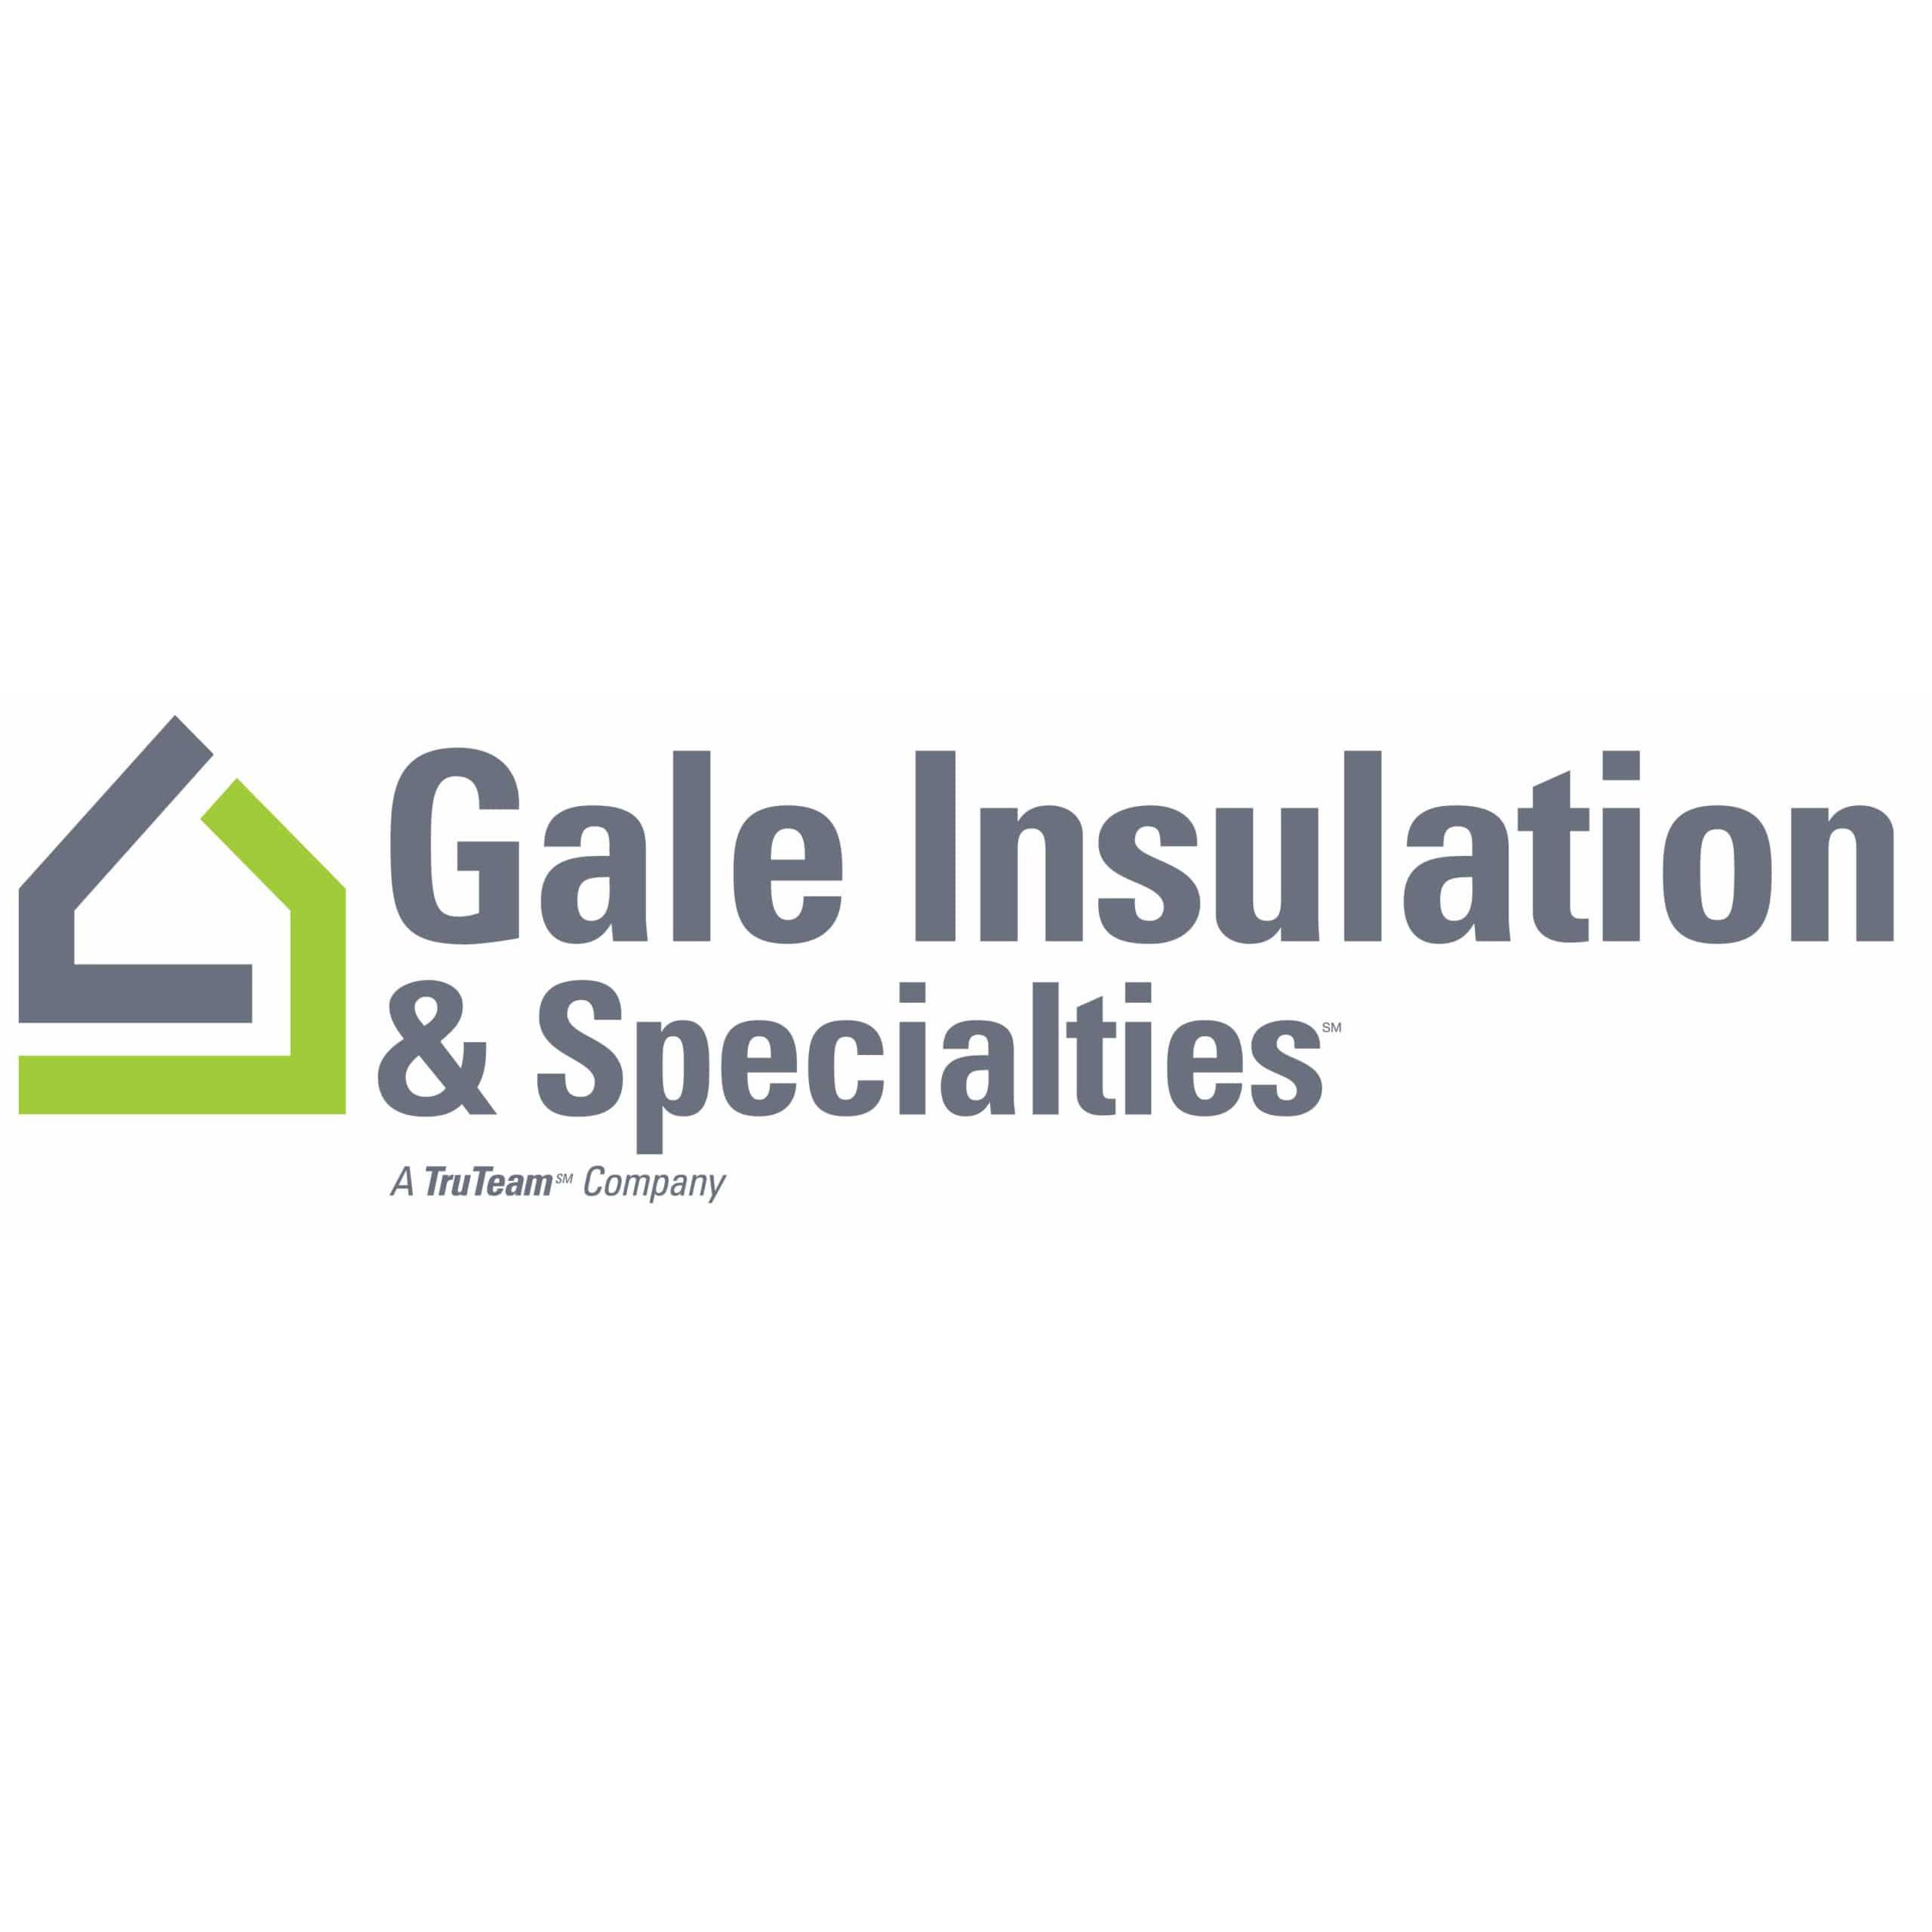 Gale Insulation & Specialties